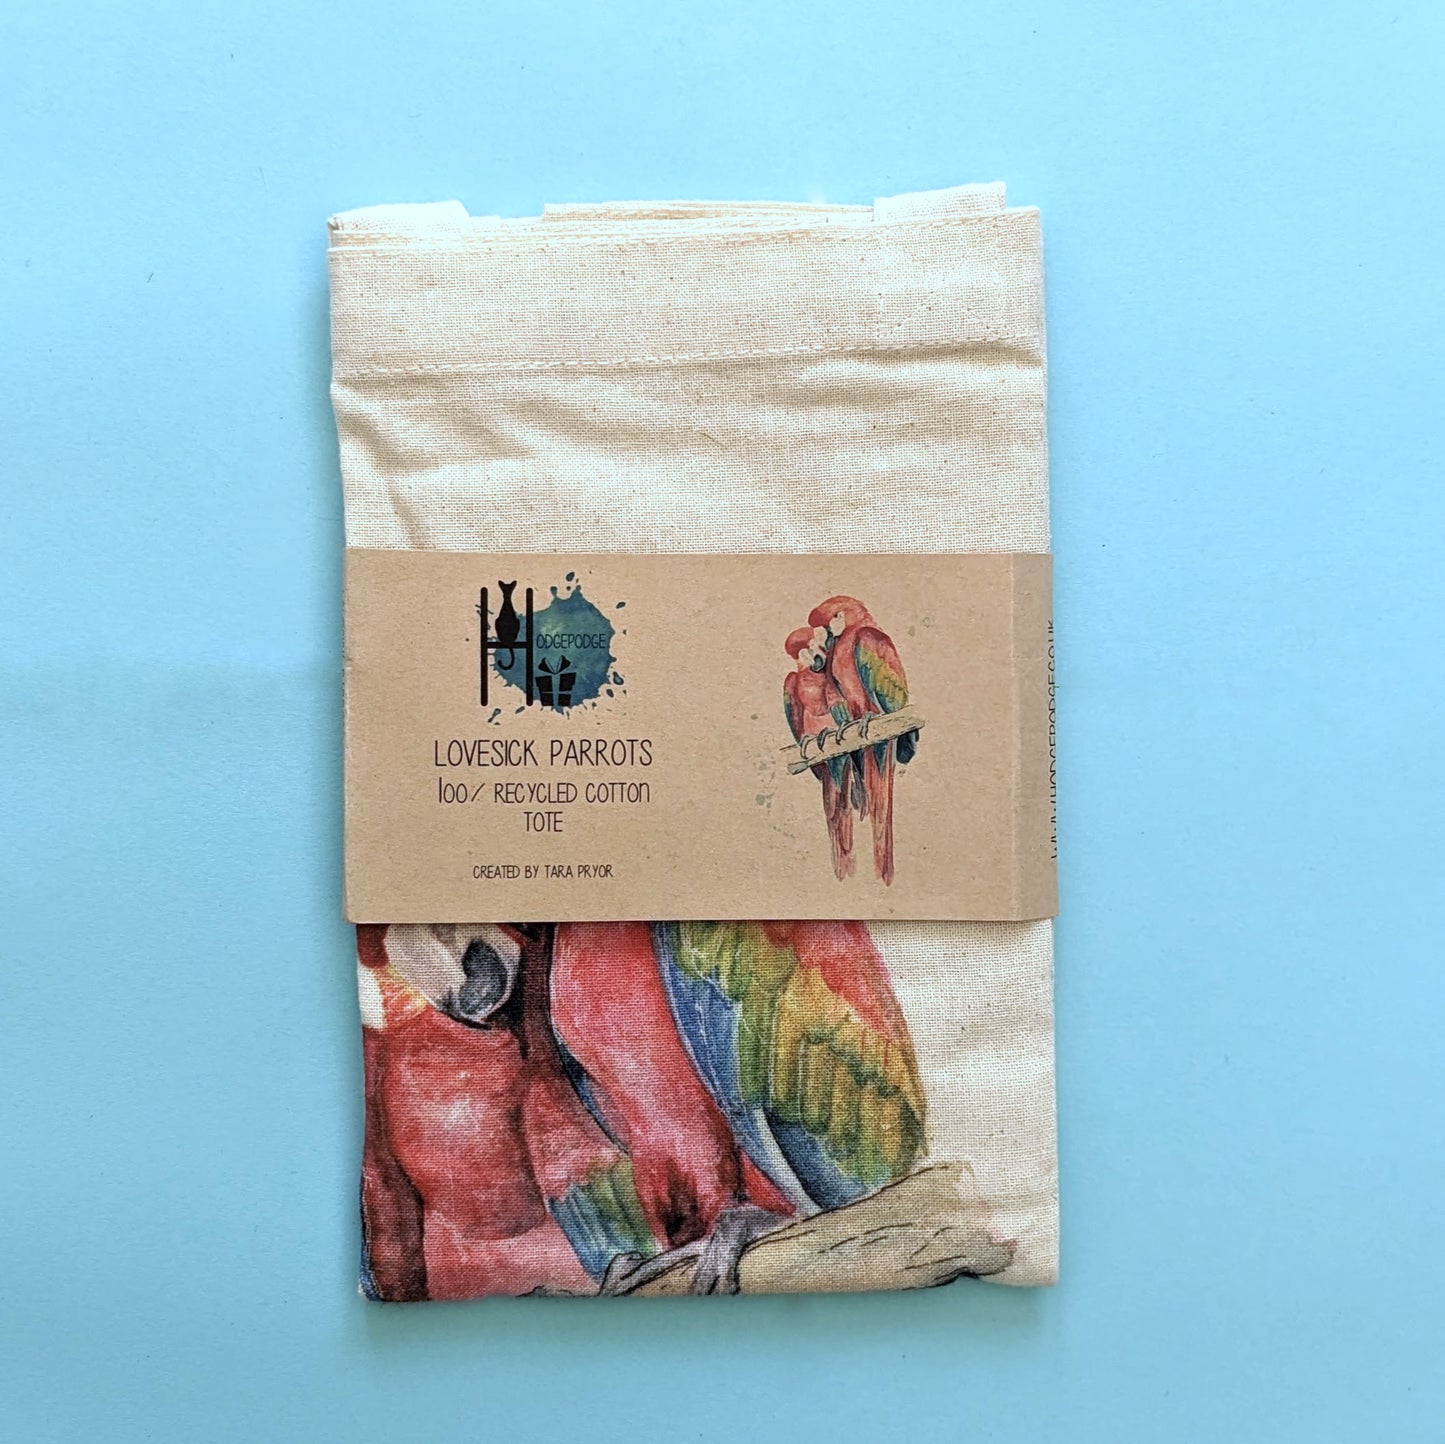 "Lovesick Parrots" Tote Bag